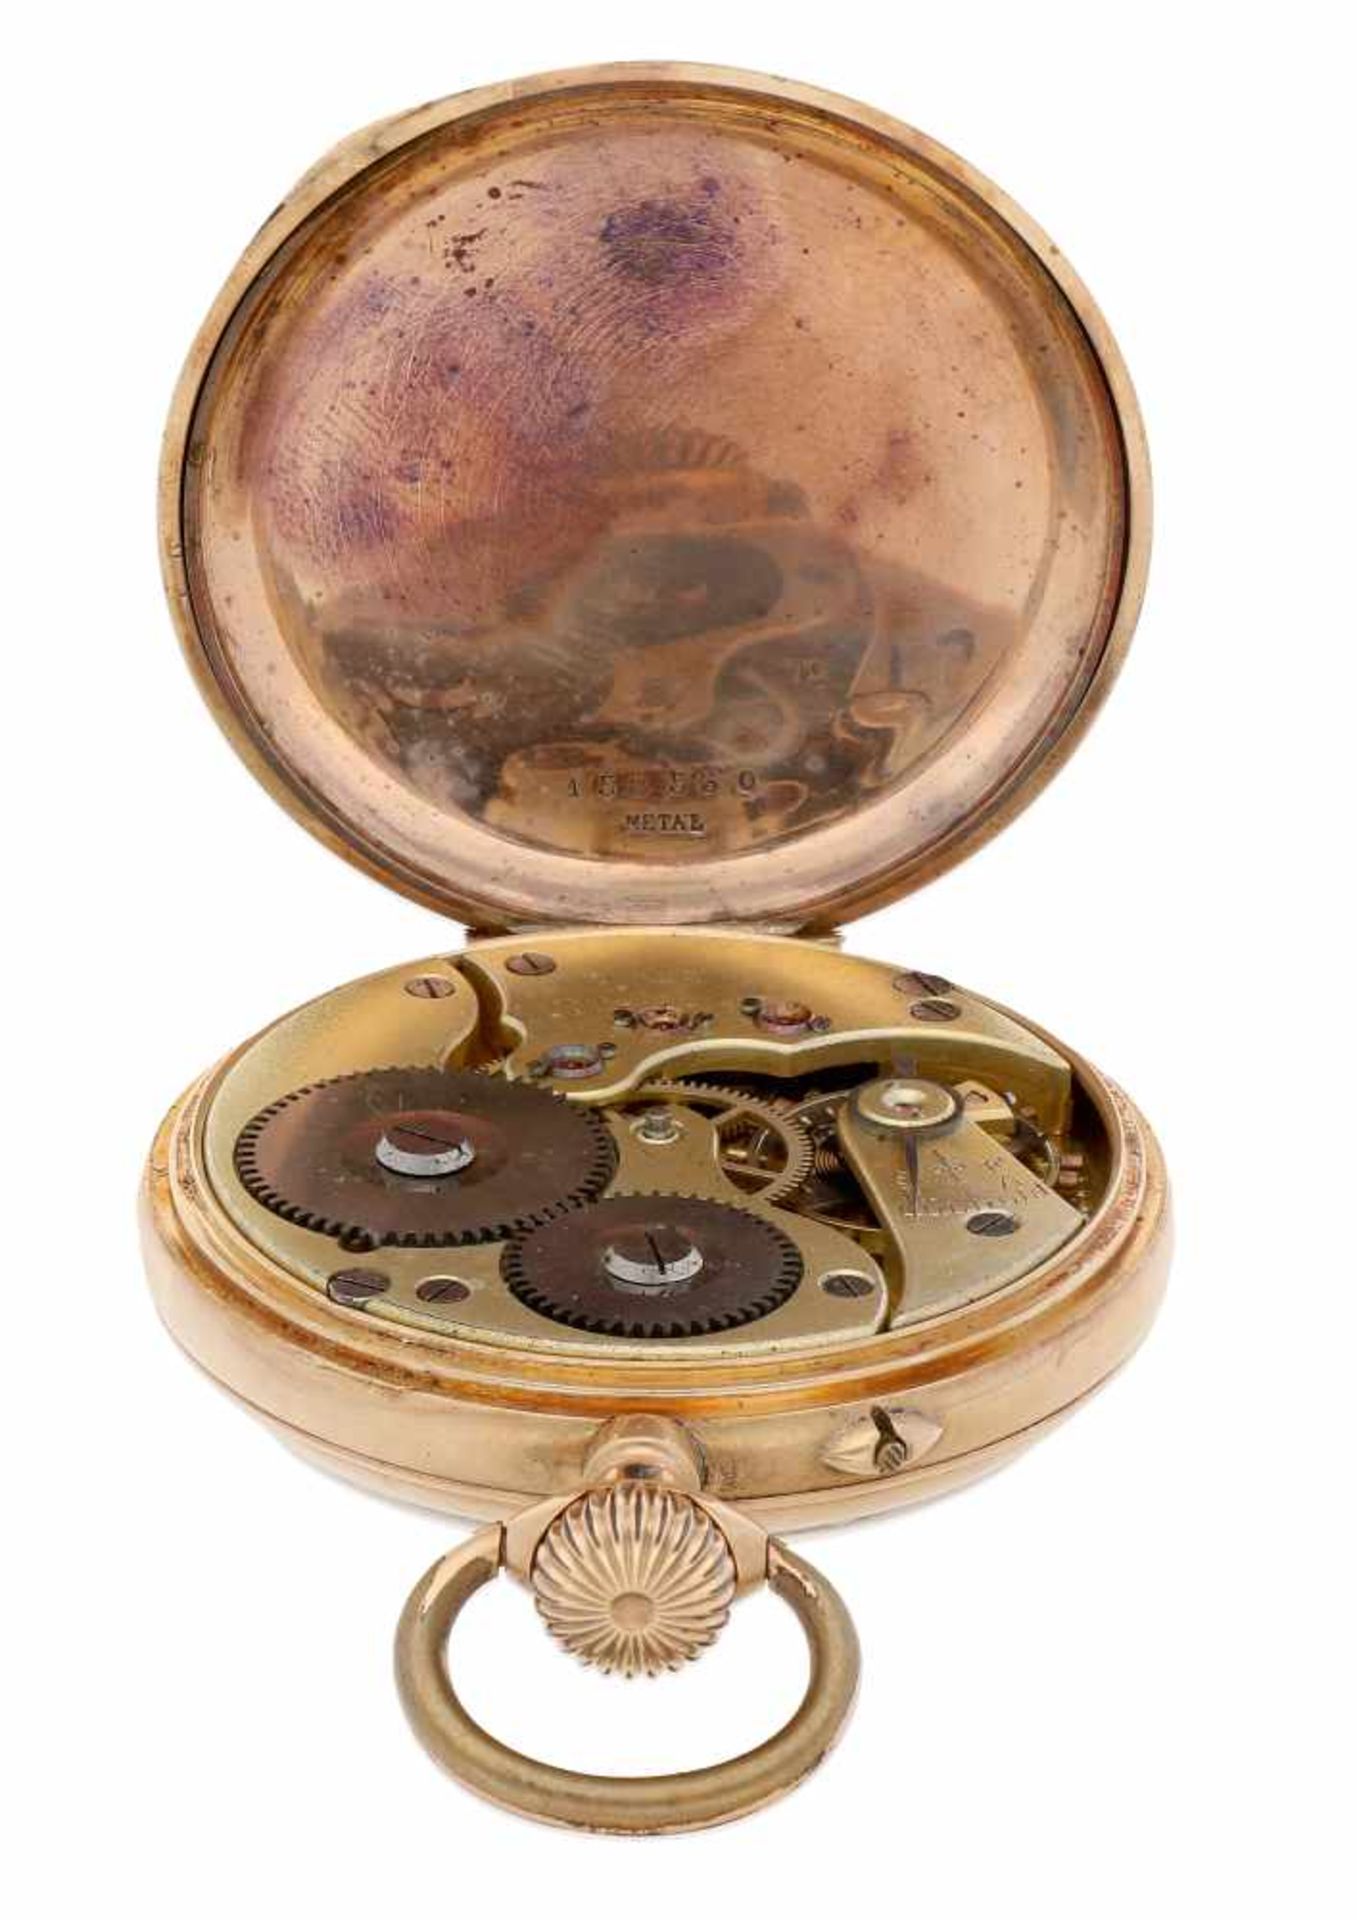 Pocket watch IWC gold - Men's pocket watch - Manual winding - Ca. 1900. - Bild 5 aus 6